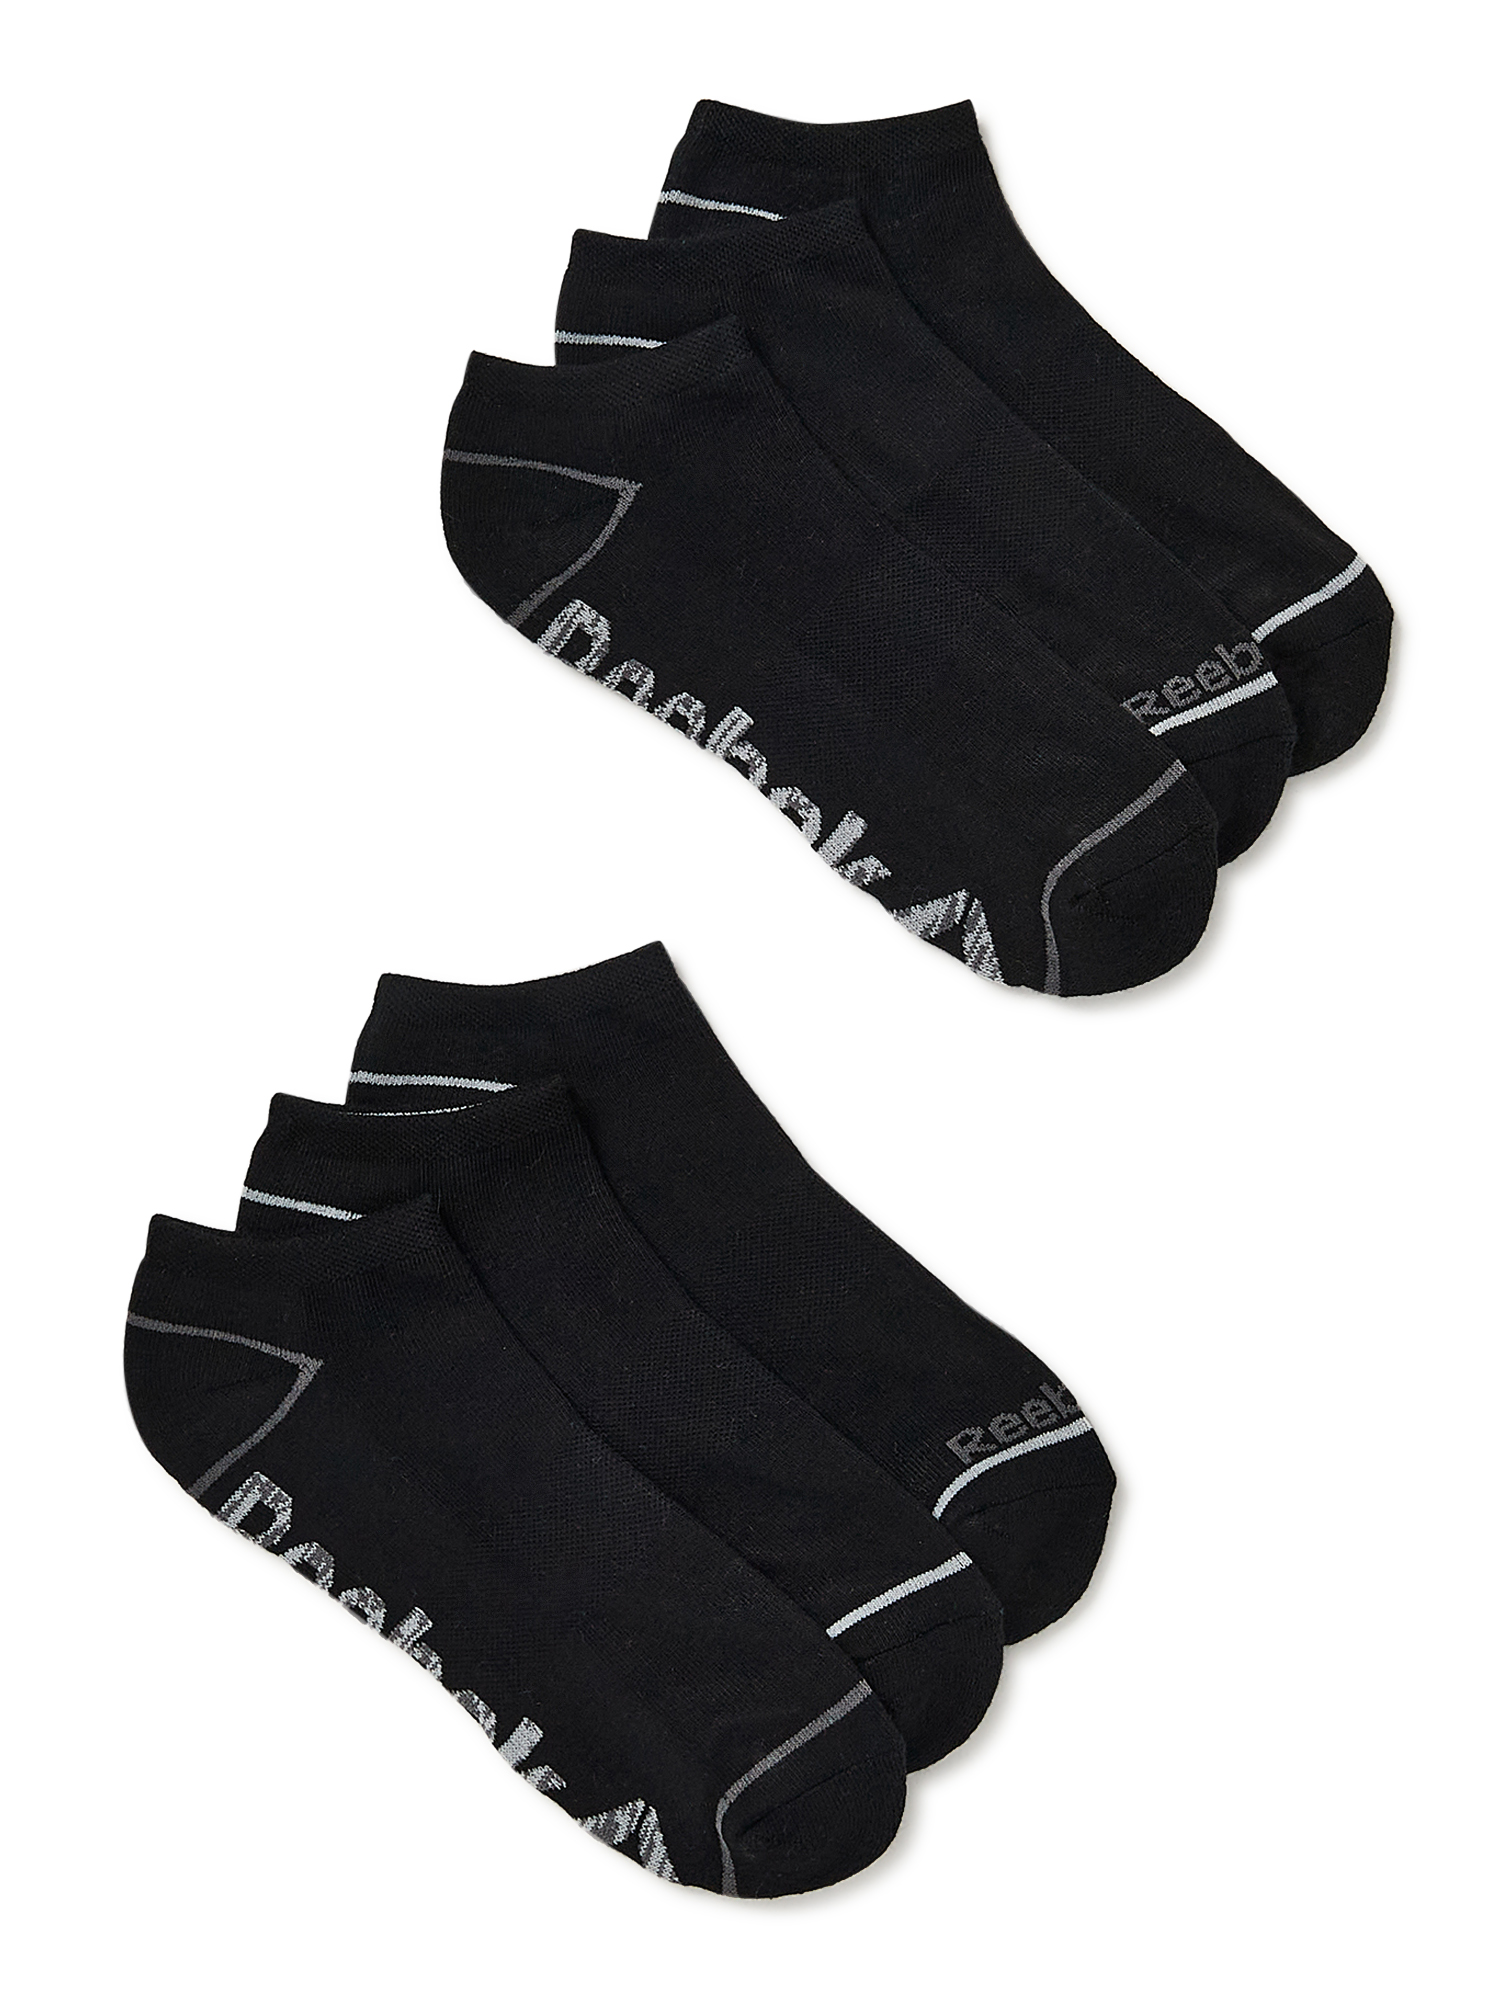 Reebok Men's Pro Series Low Cut Socks, 6-Pack - image 1 of 8